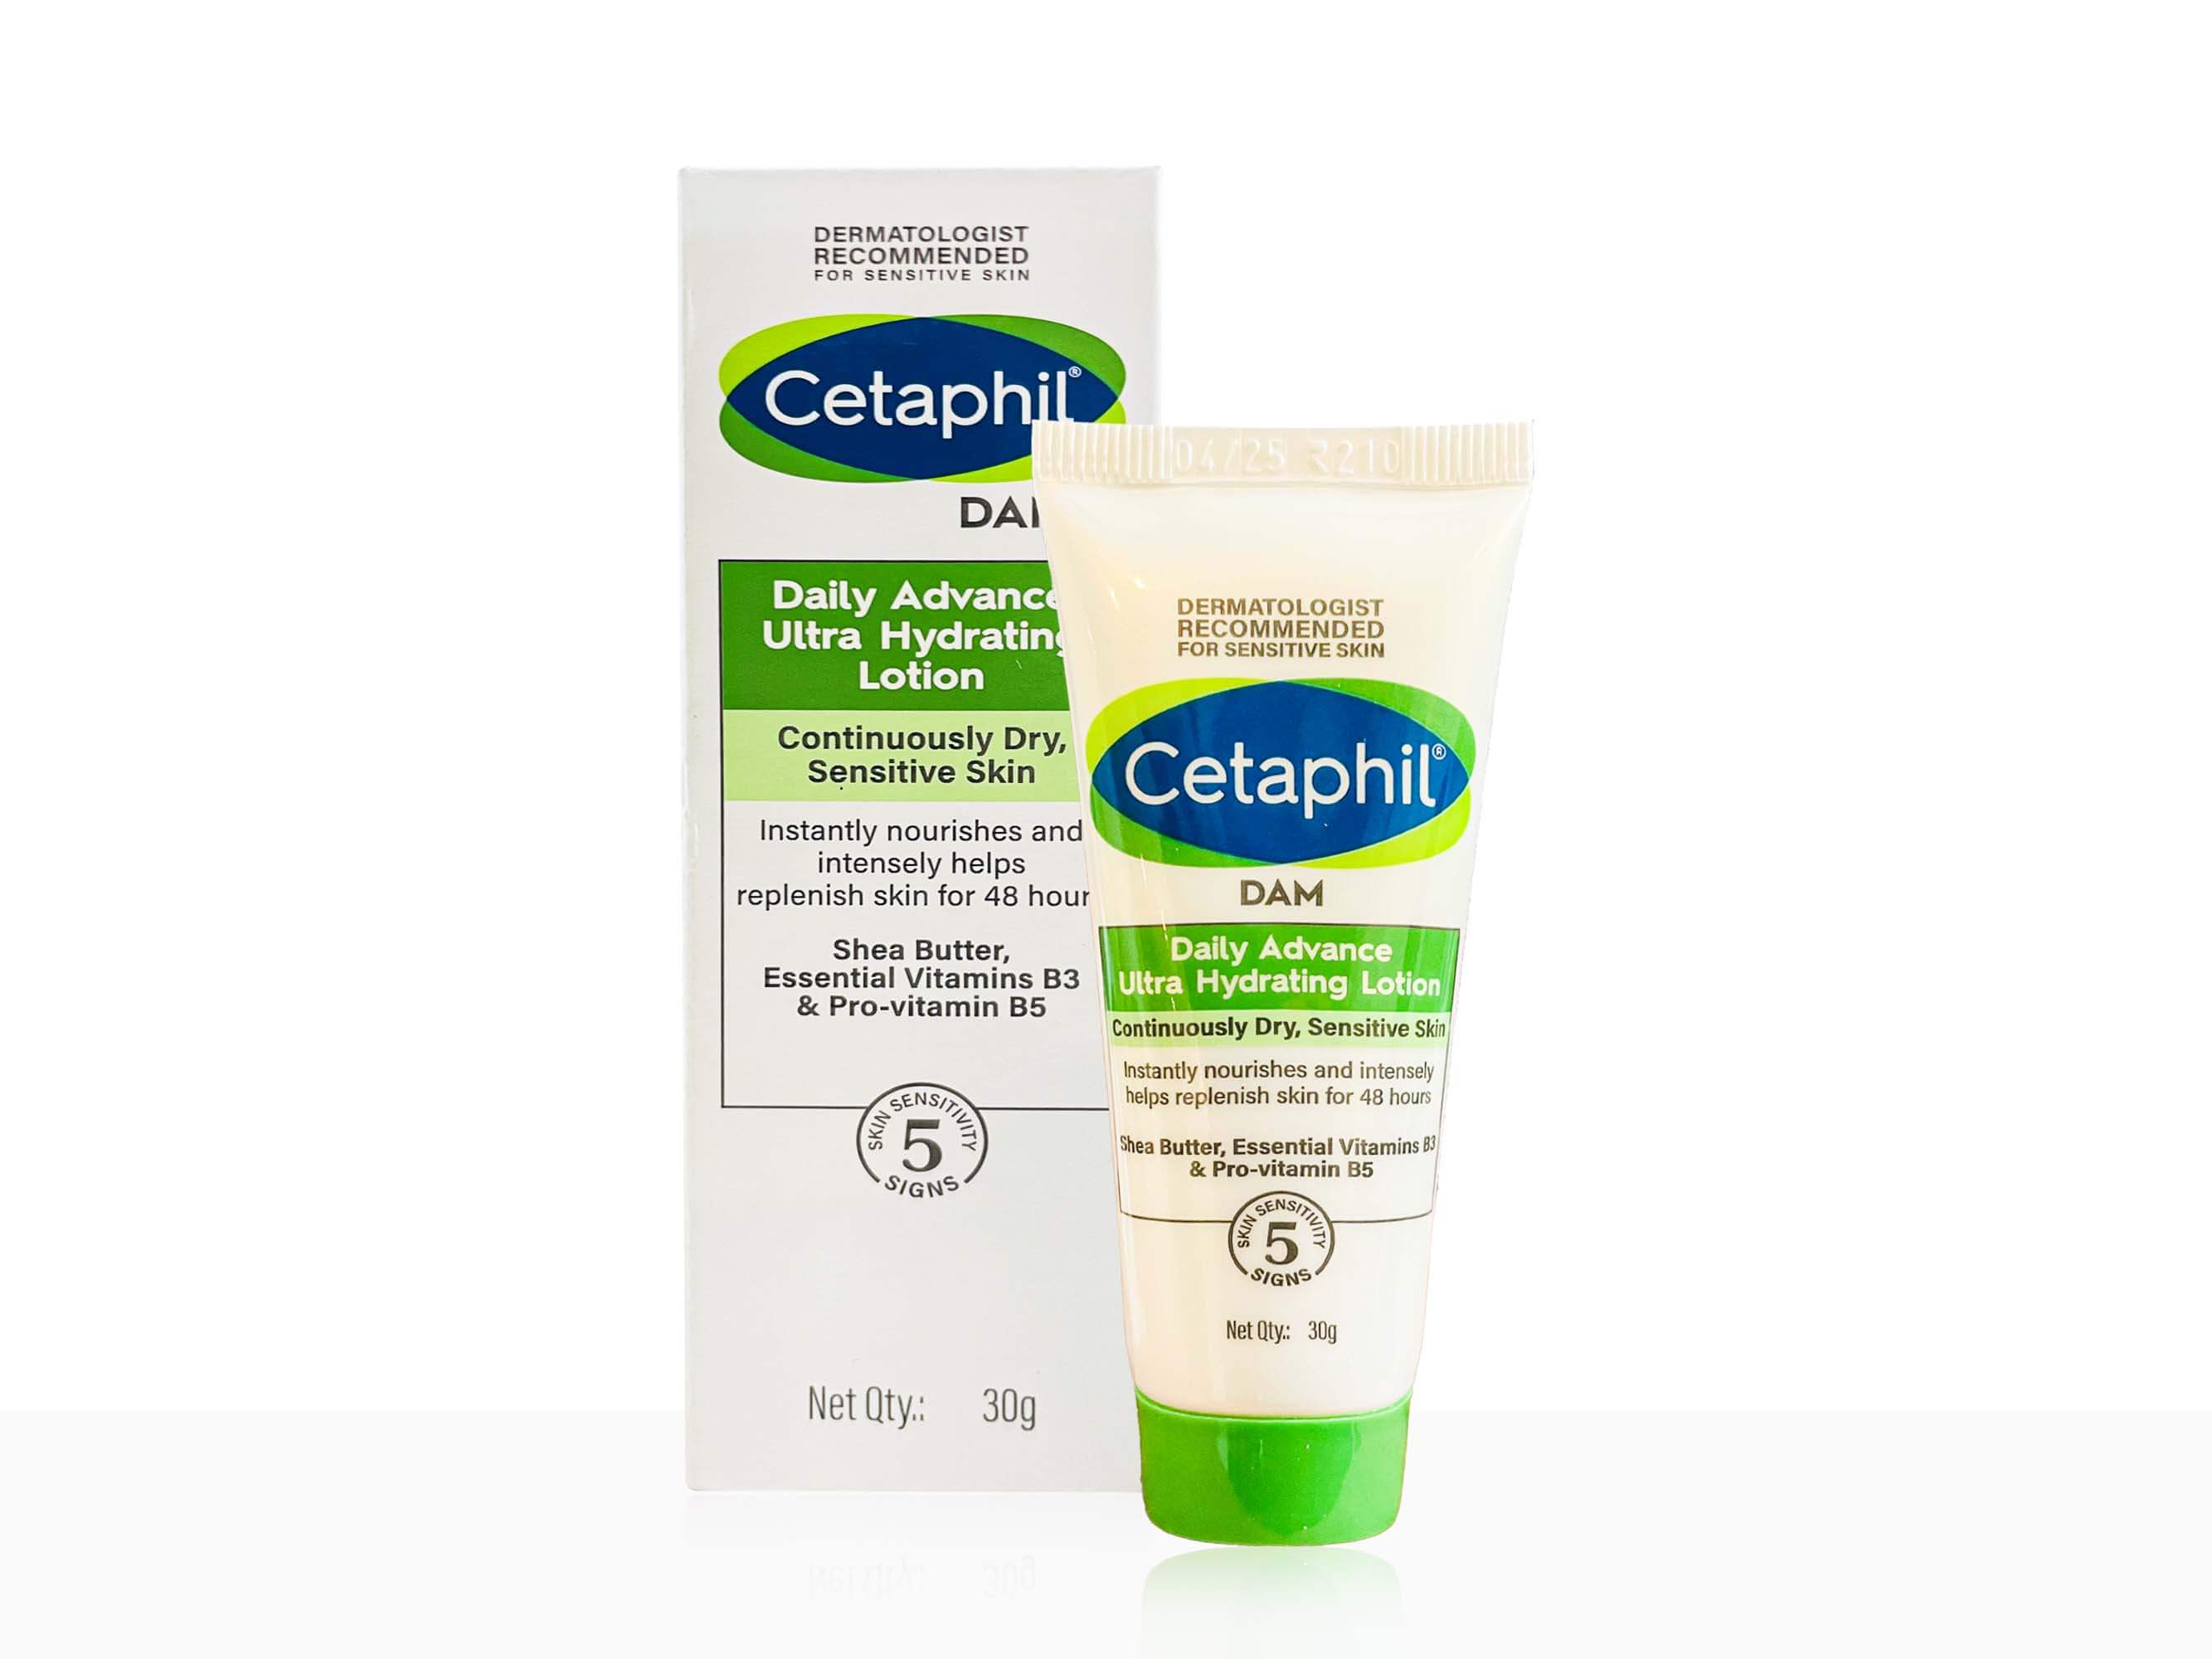 Cetaphil DAM Daily Advance Ultra Hydrating Lotion - Clinikally